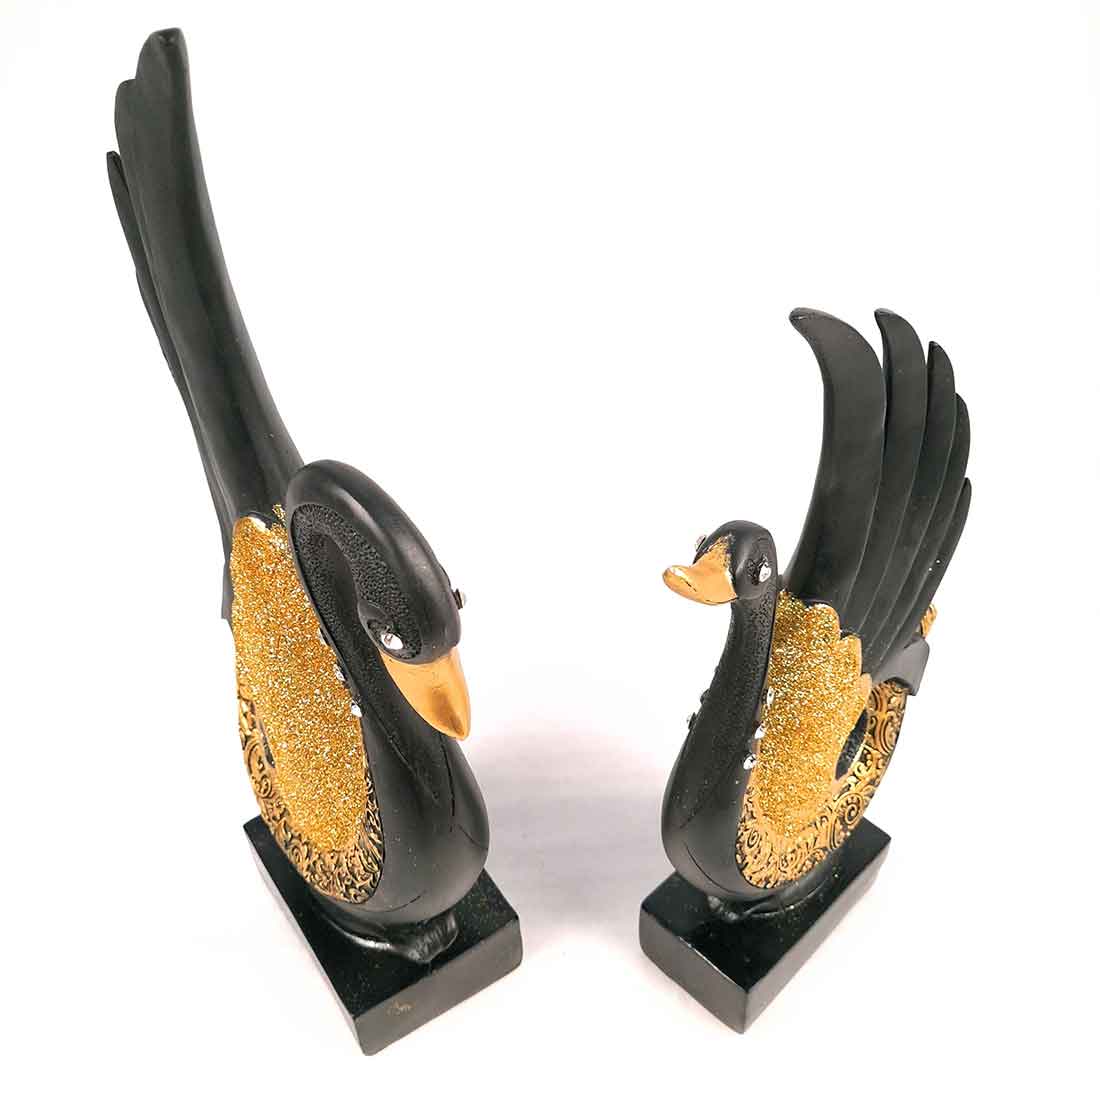 Couple Swan Pair Showpiece - For Home Decor & Gift - Set of 2 - 11 Inch-Apkamart #Color_Black